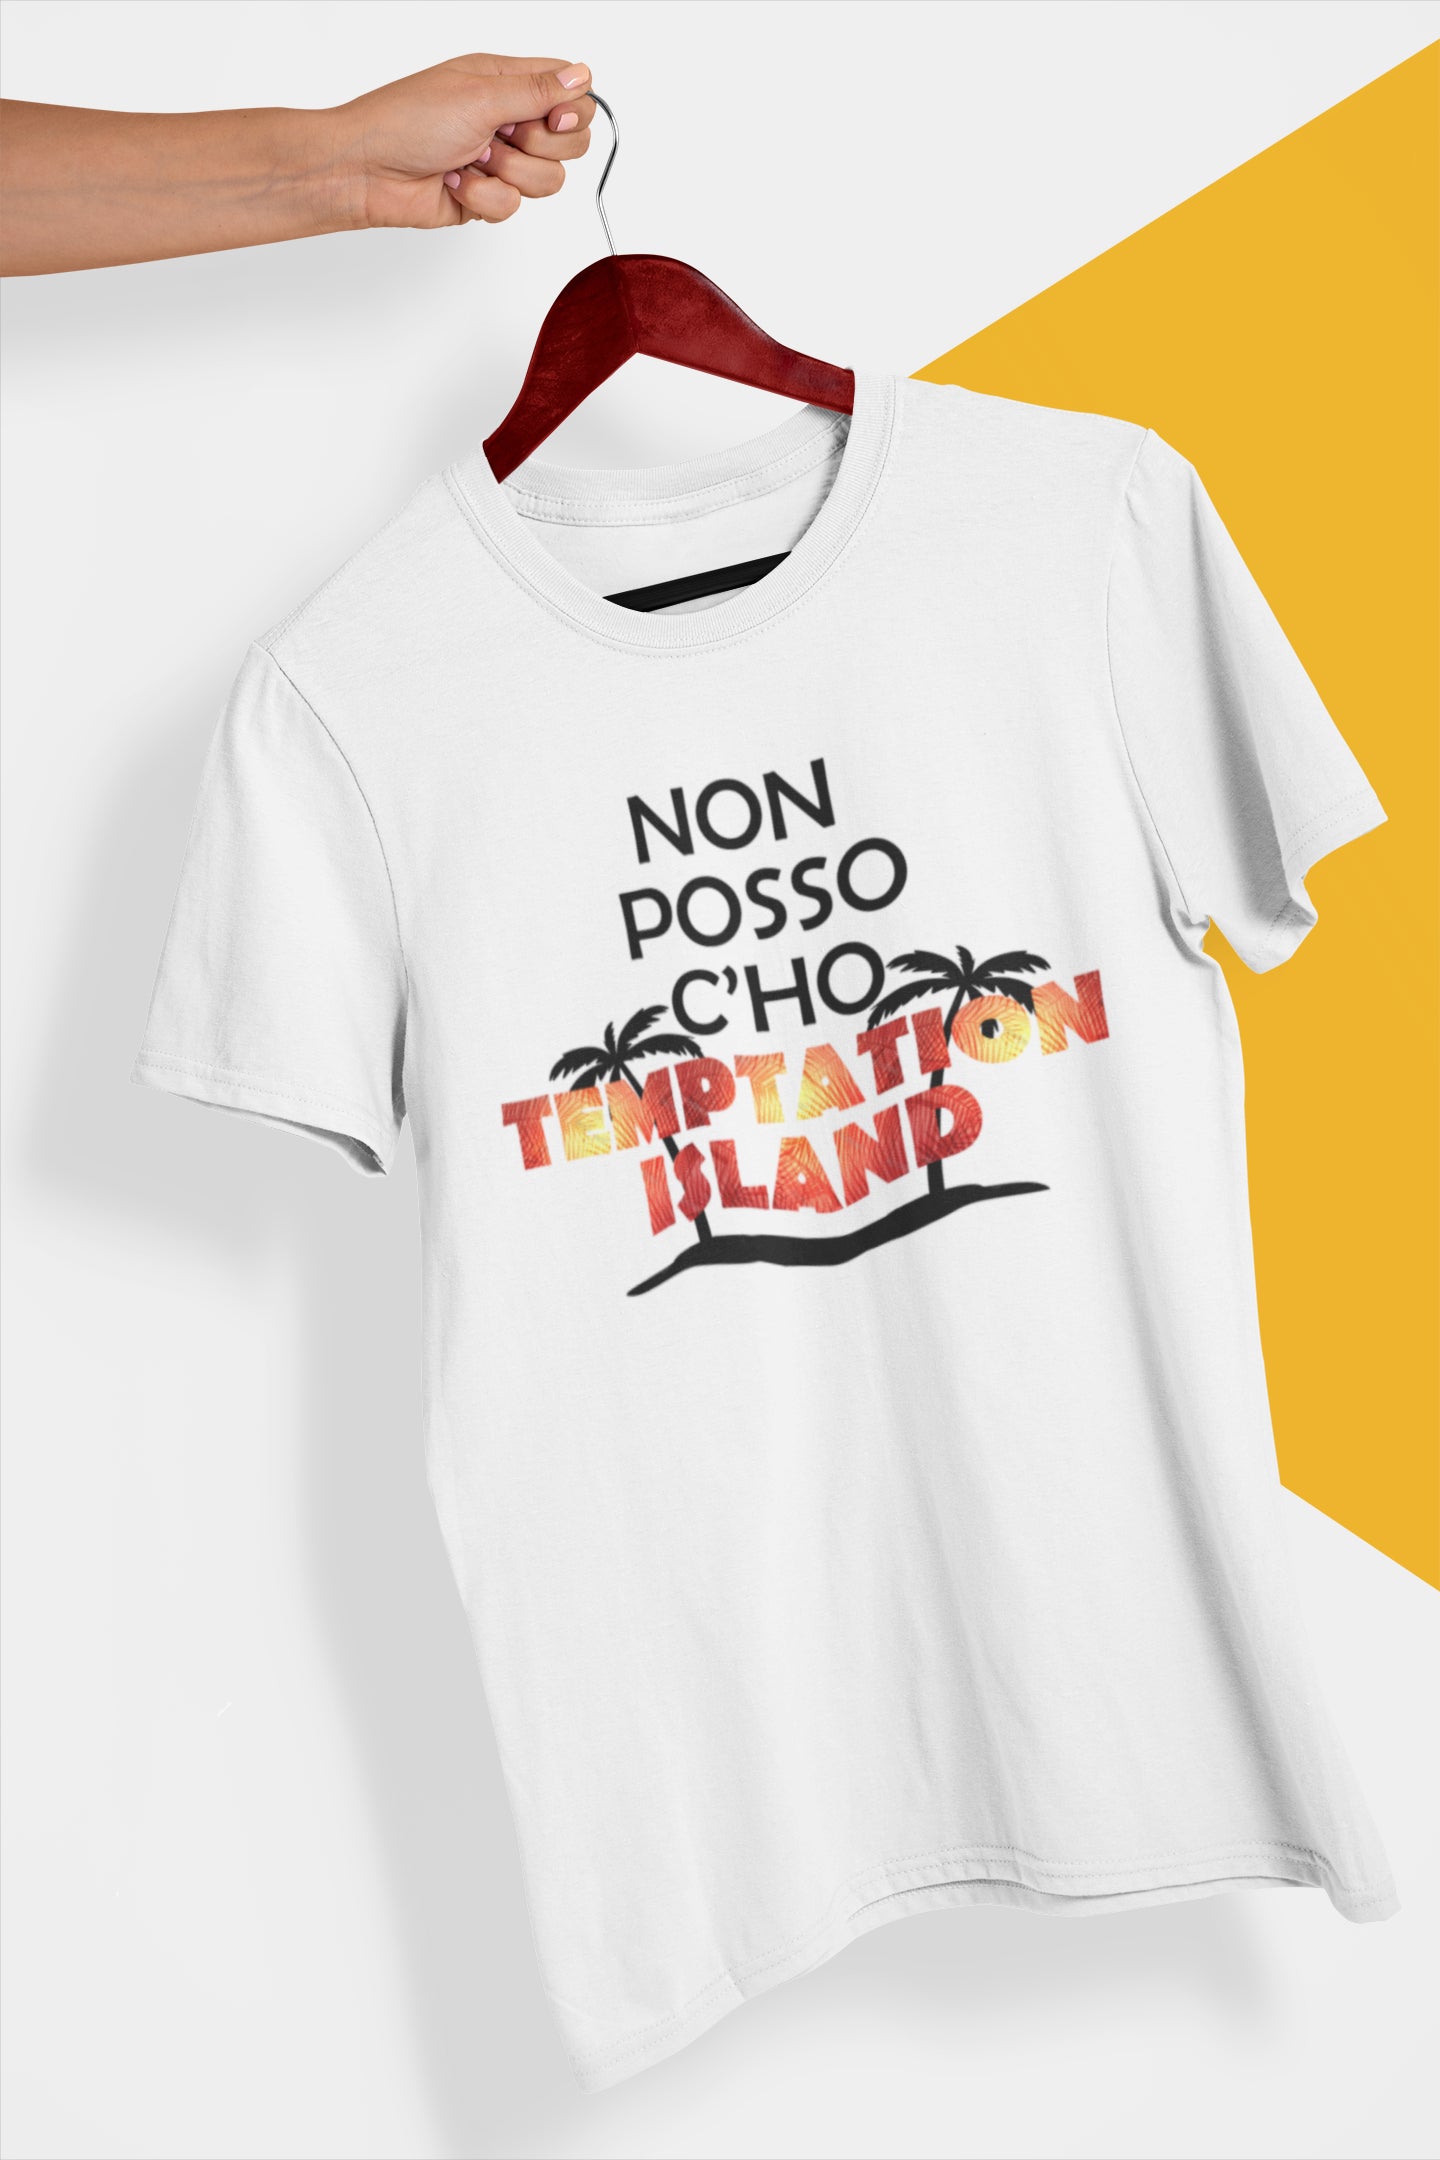 t-shirt t-shirt - I can't cho temptation island funny gift idea